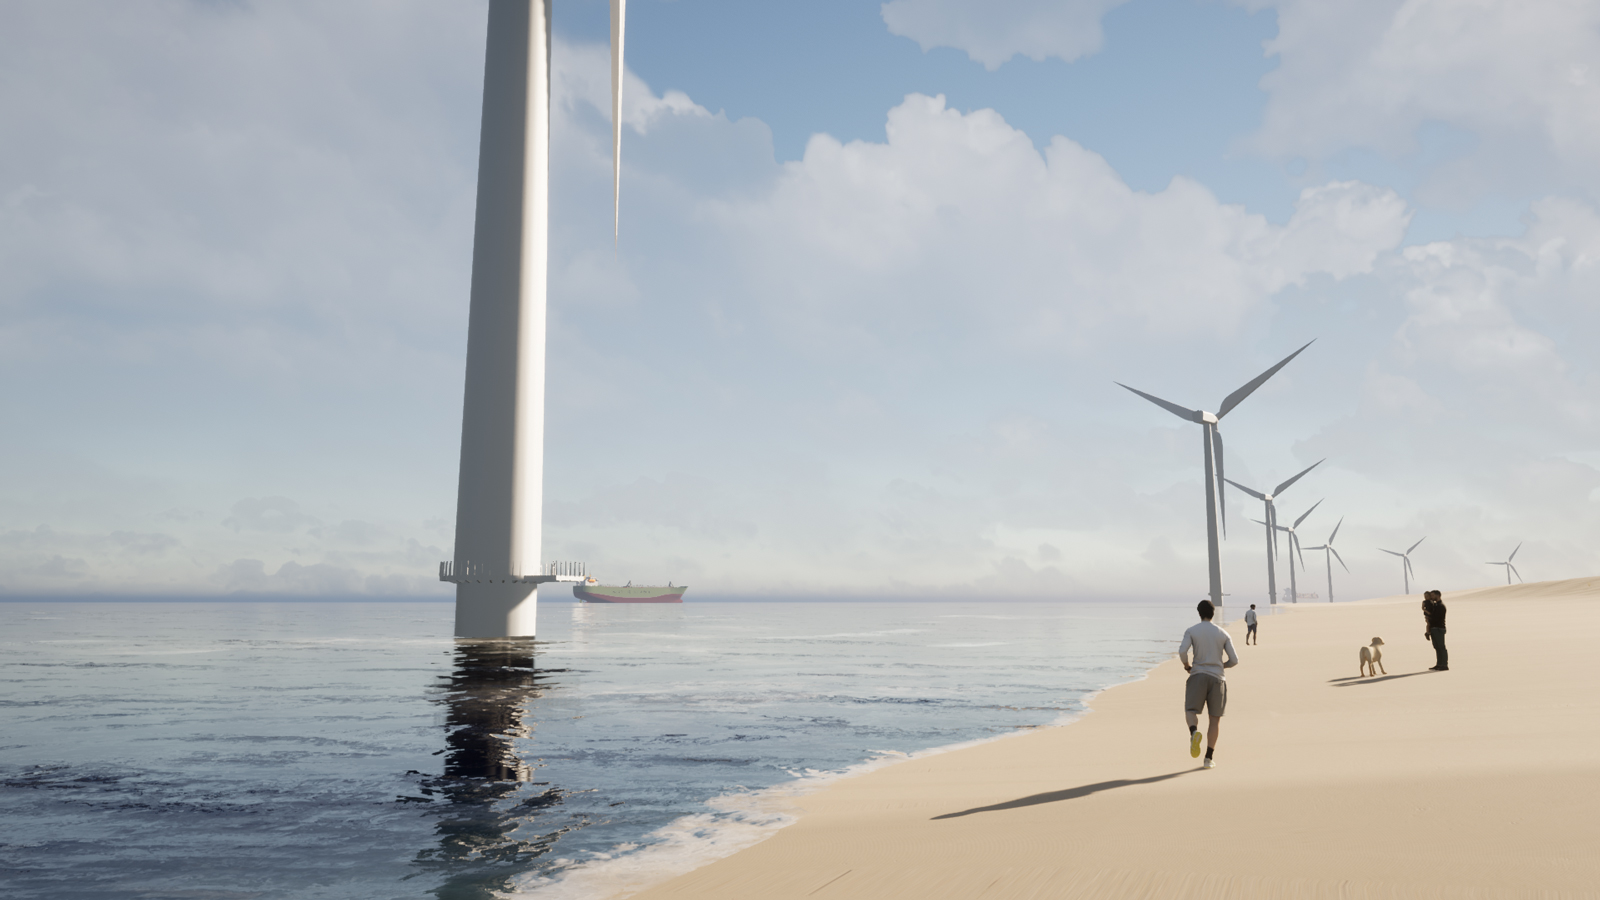 Solidd Steel Structures chosen as project partner for Wind Farm Maasvlakte 2